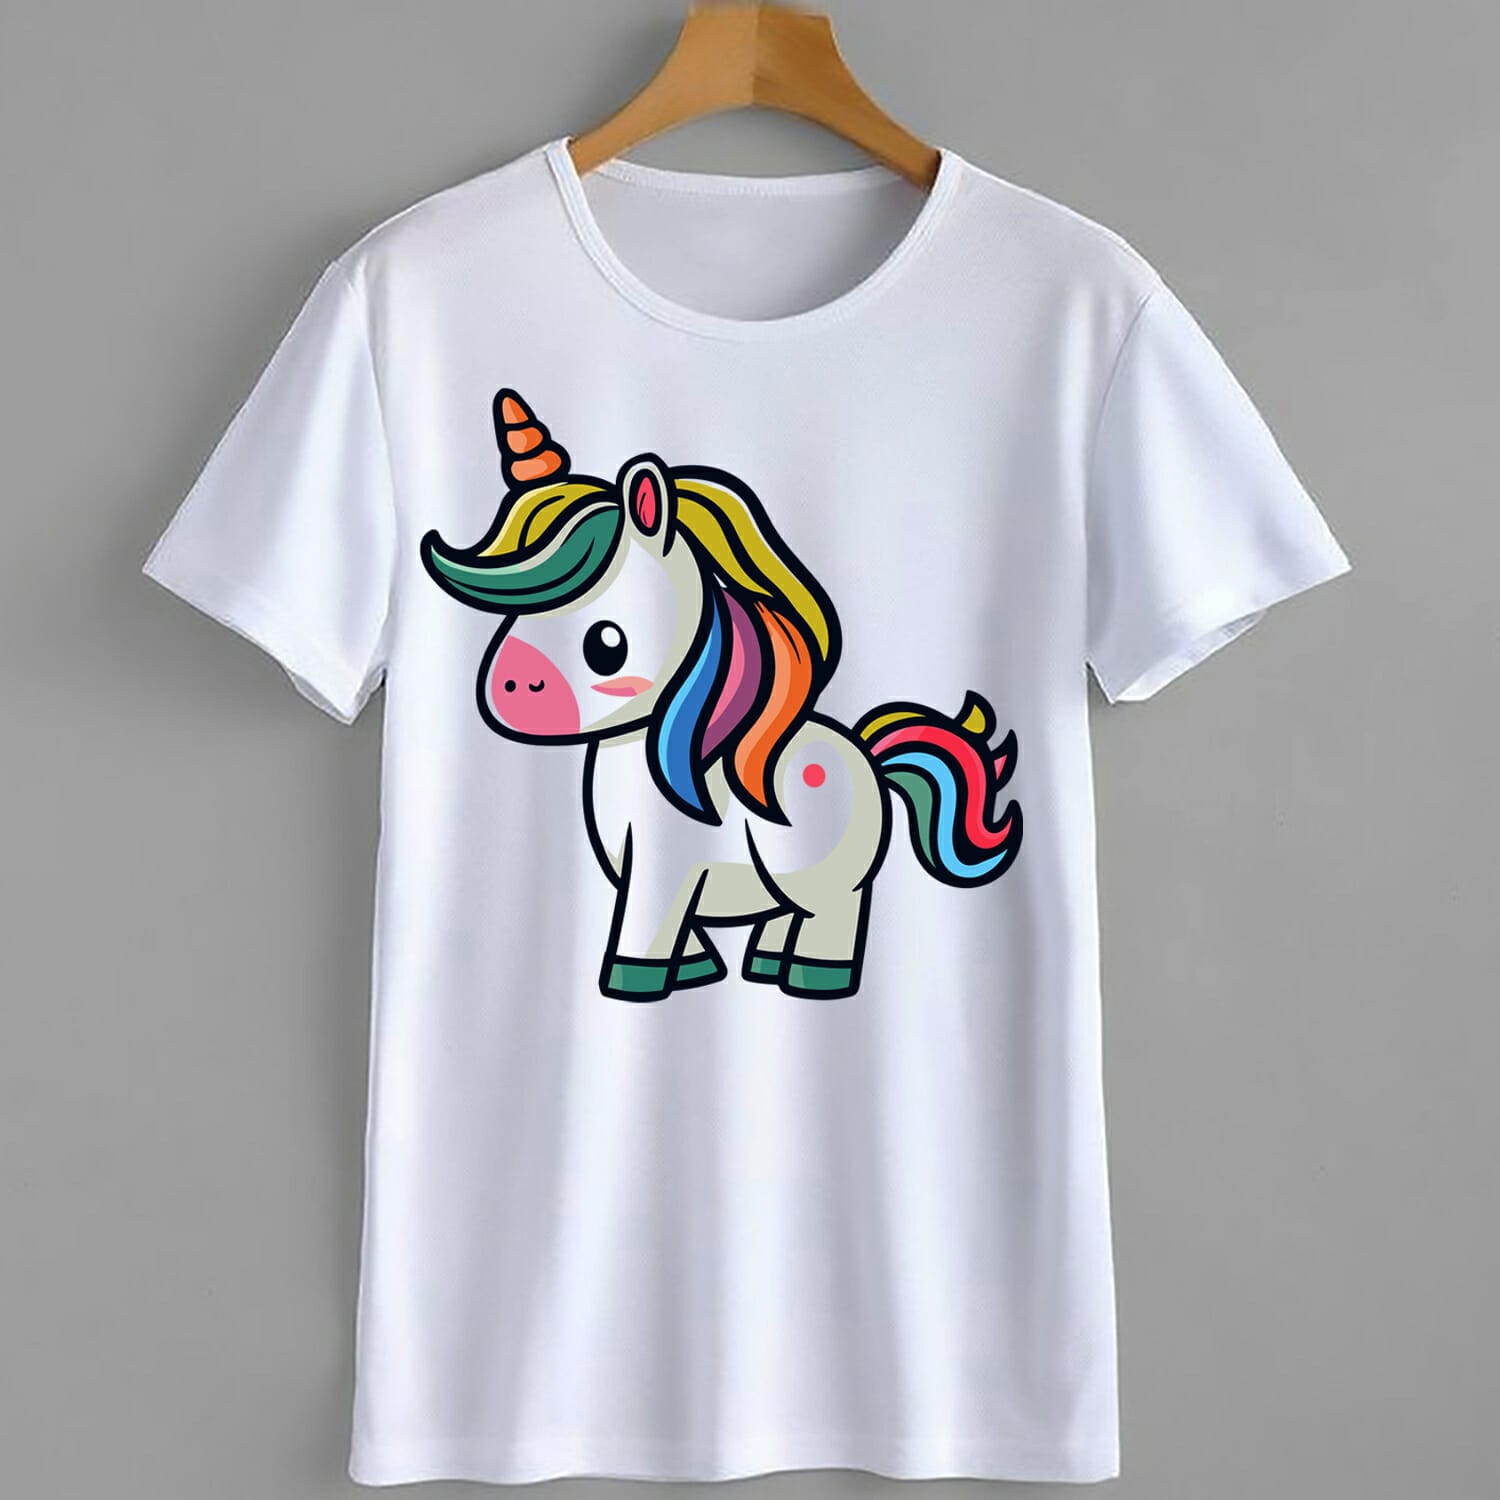 Groovy Kids Unicorn T-Shirt Design